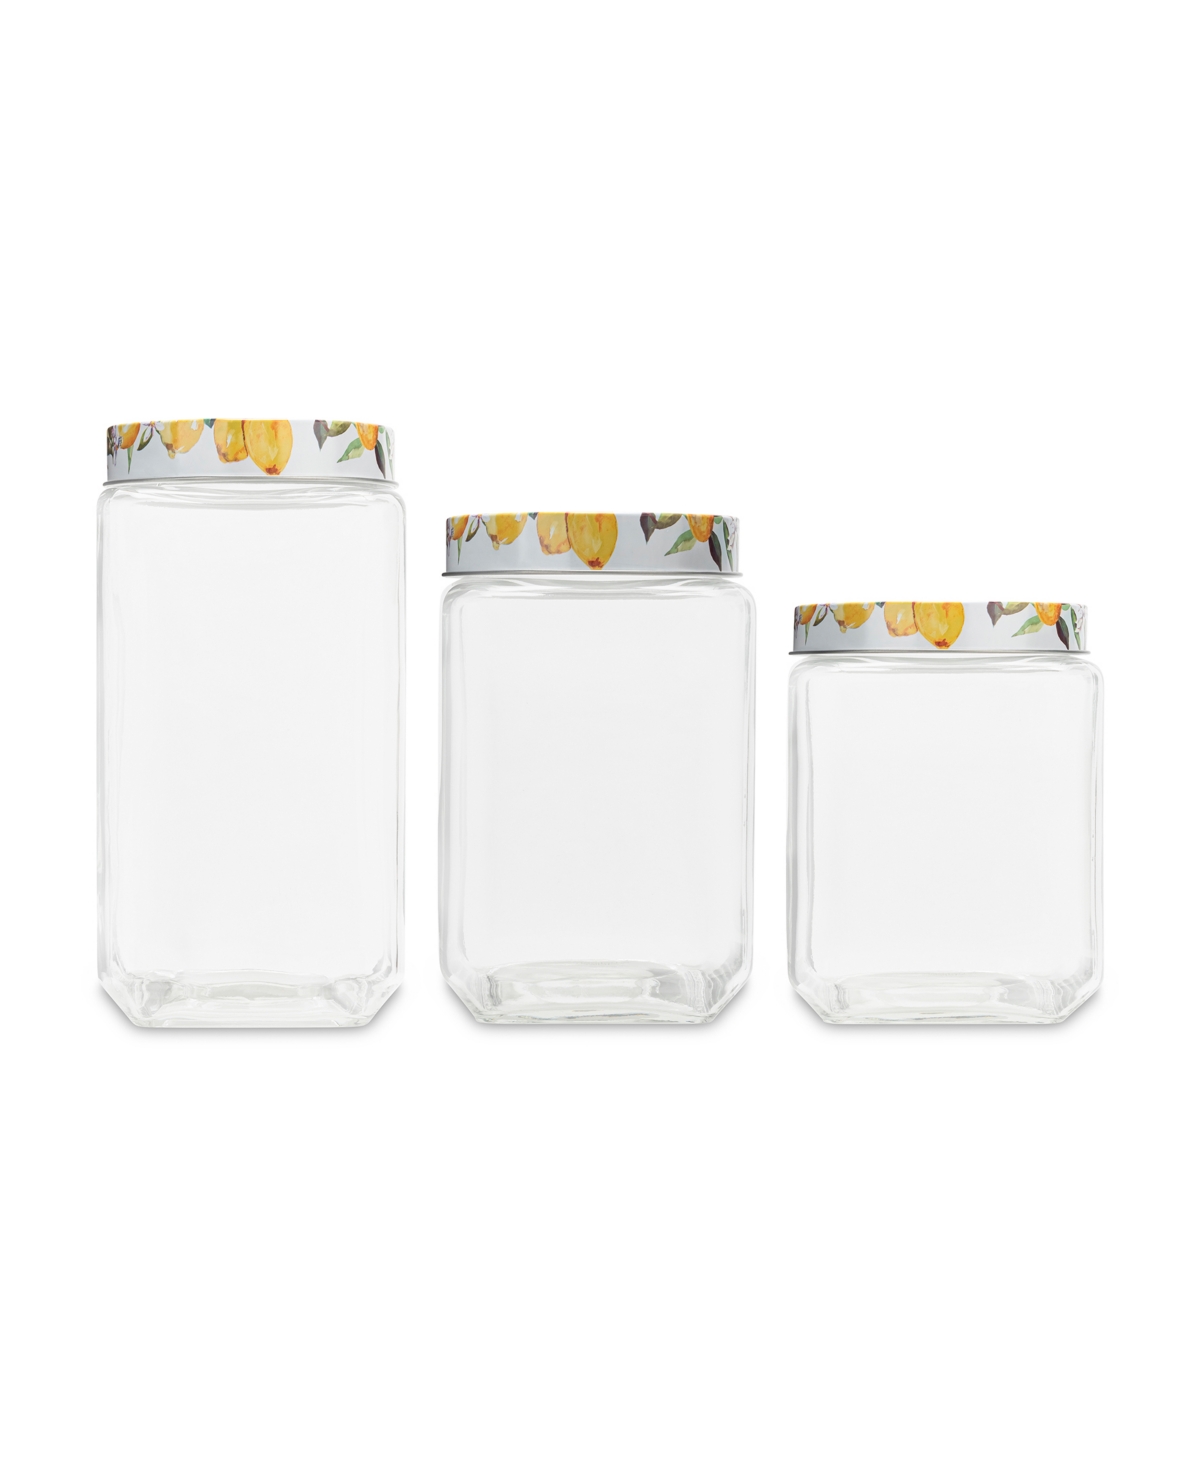 American Atelier Meyer Lemons Square Glass Jars Set, 3 Piece In Clear